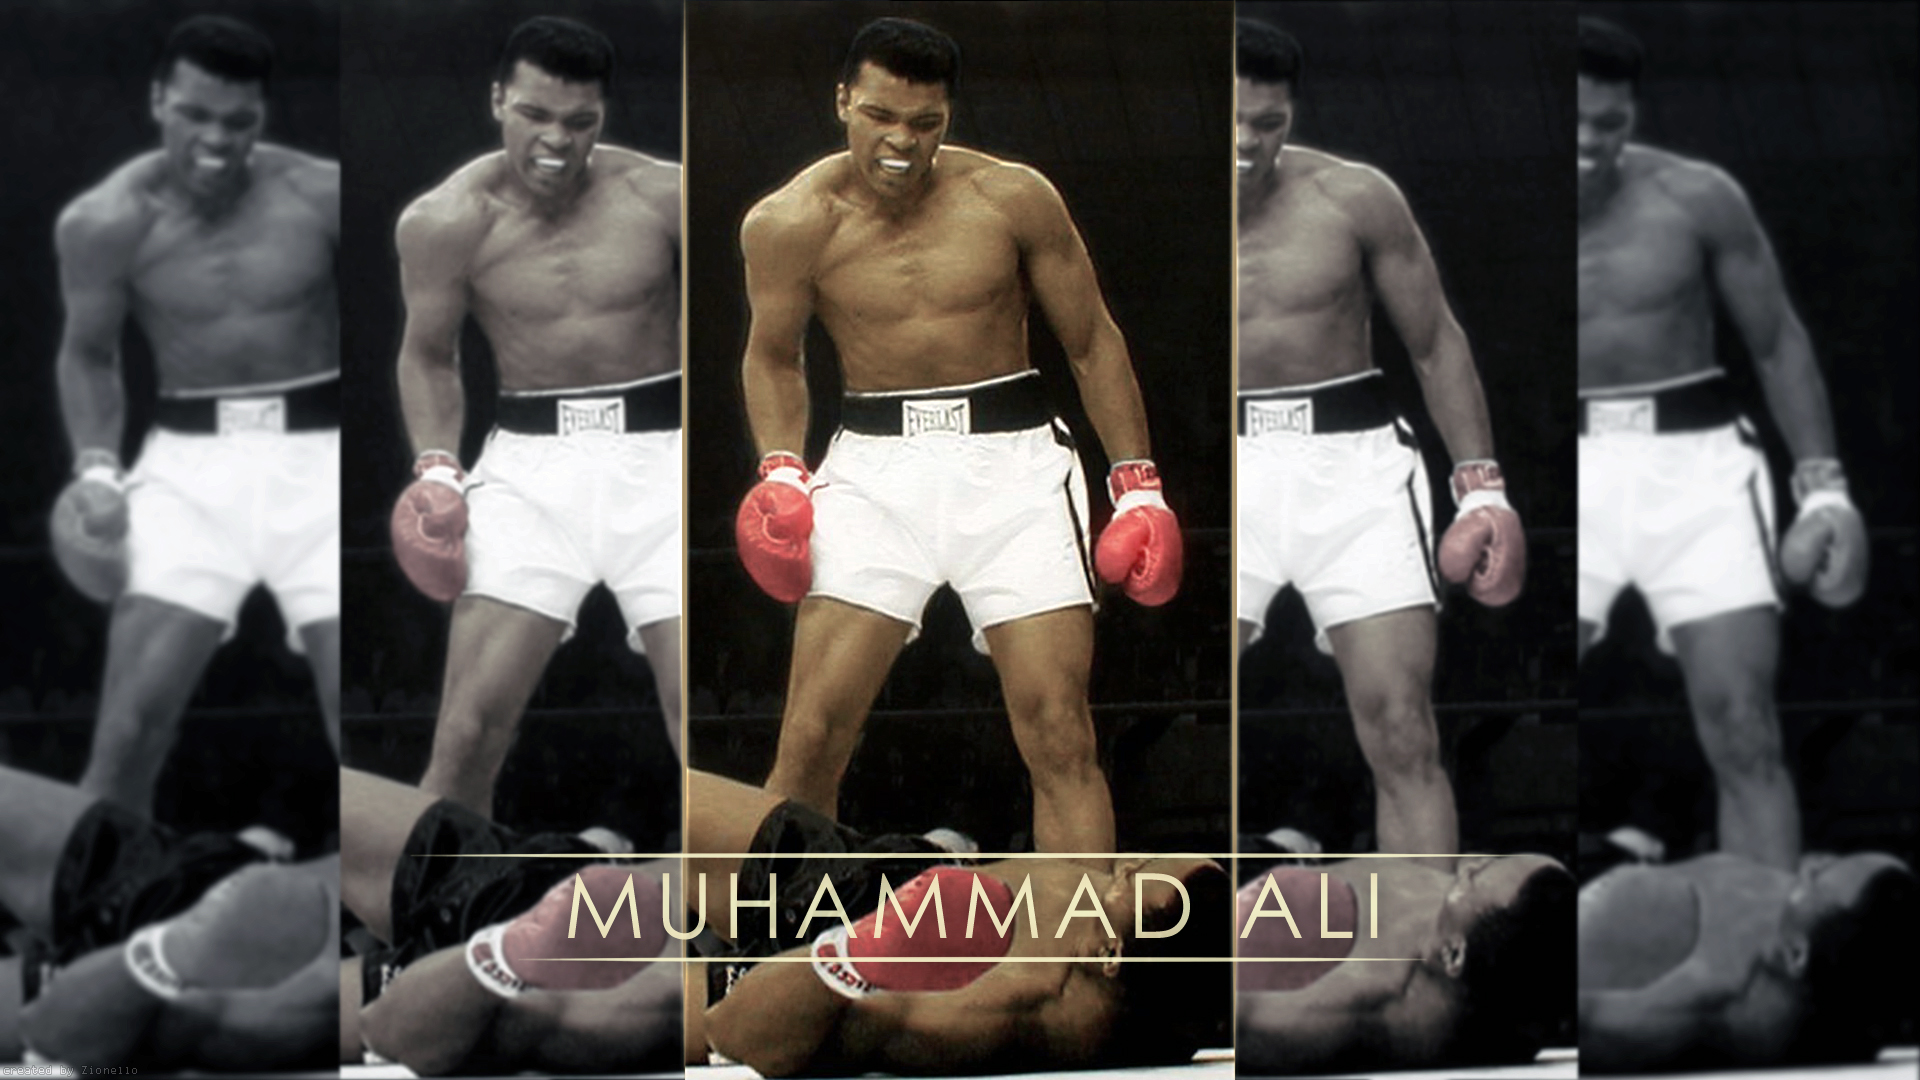 Michael Jordan vs Muhammad Ali who was bigger 1920x1080